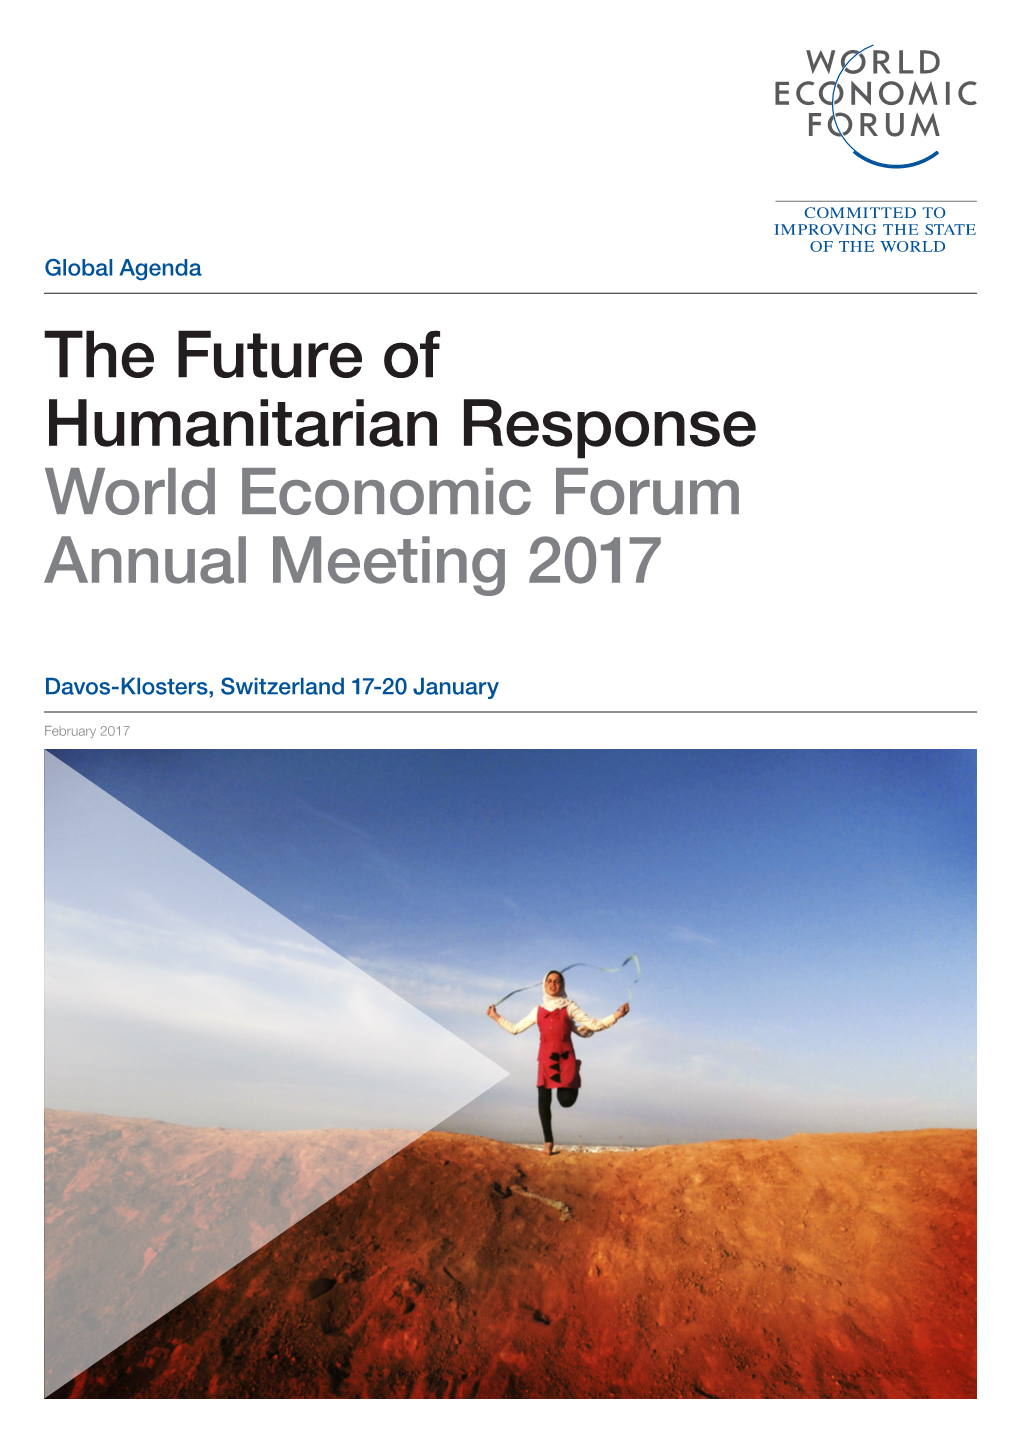 The Future of Humanitarian Response World Economic Forum Annual Meeting 2017